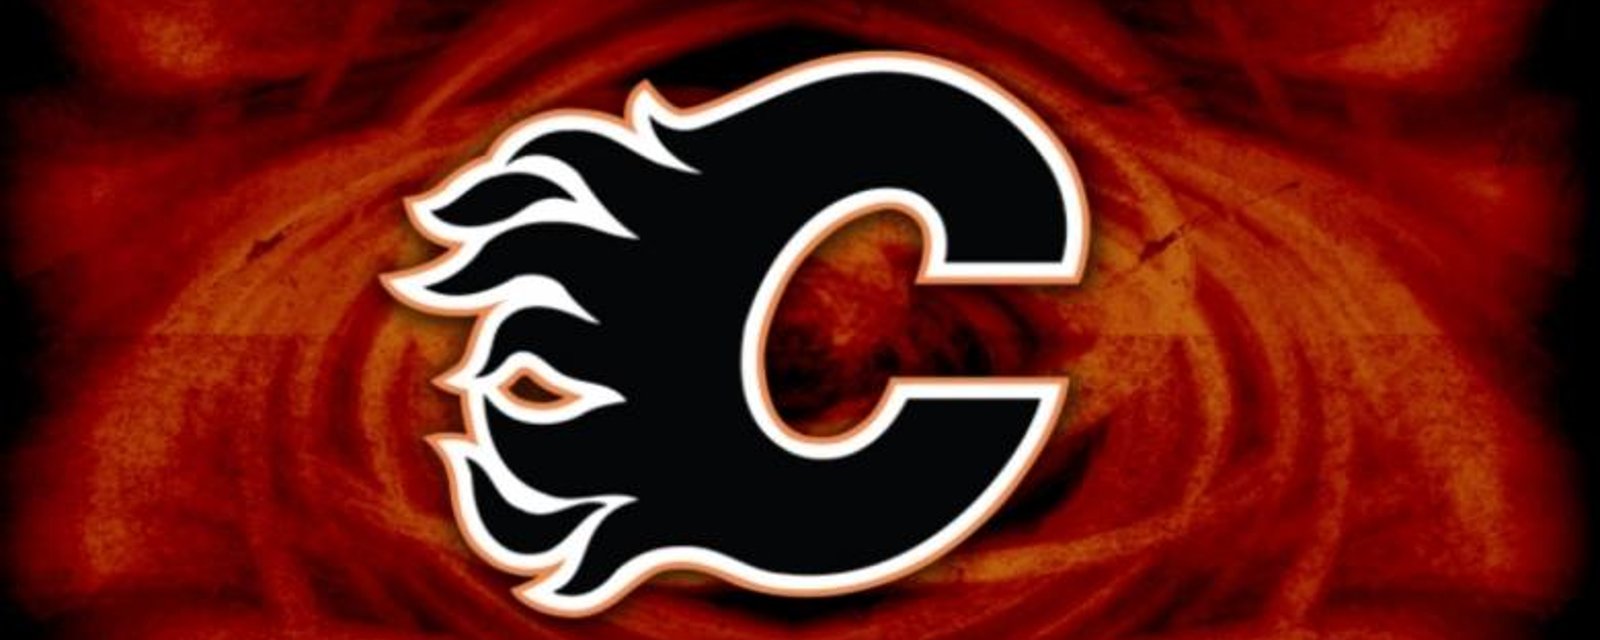 Veteran defenseman retires as a Calgary Flames after signing 